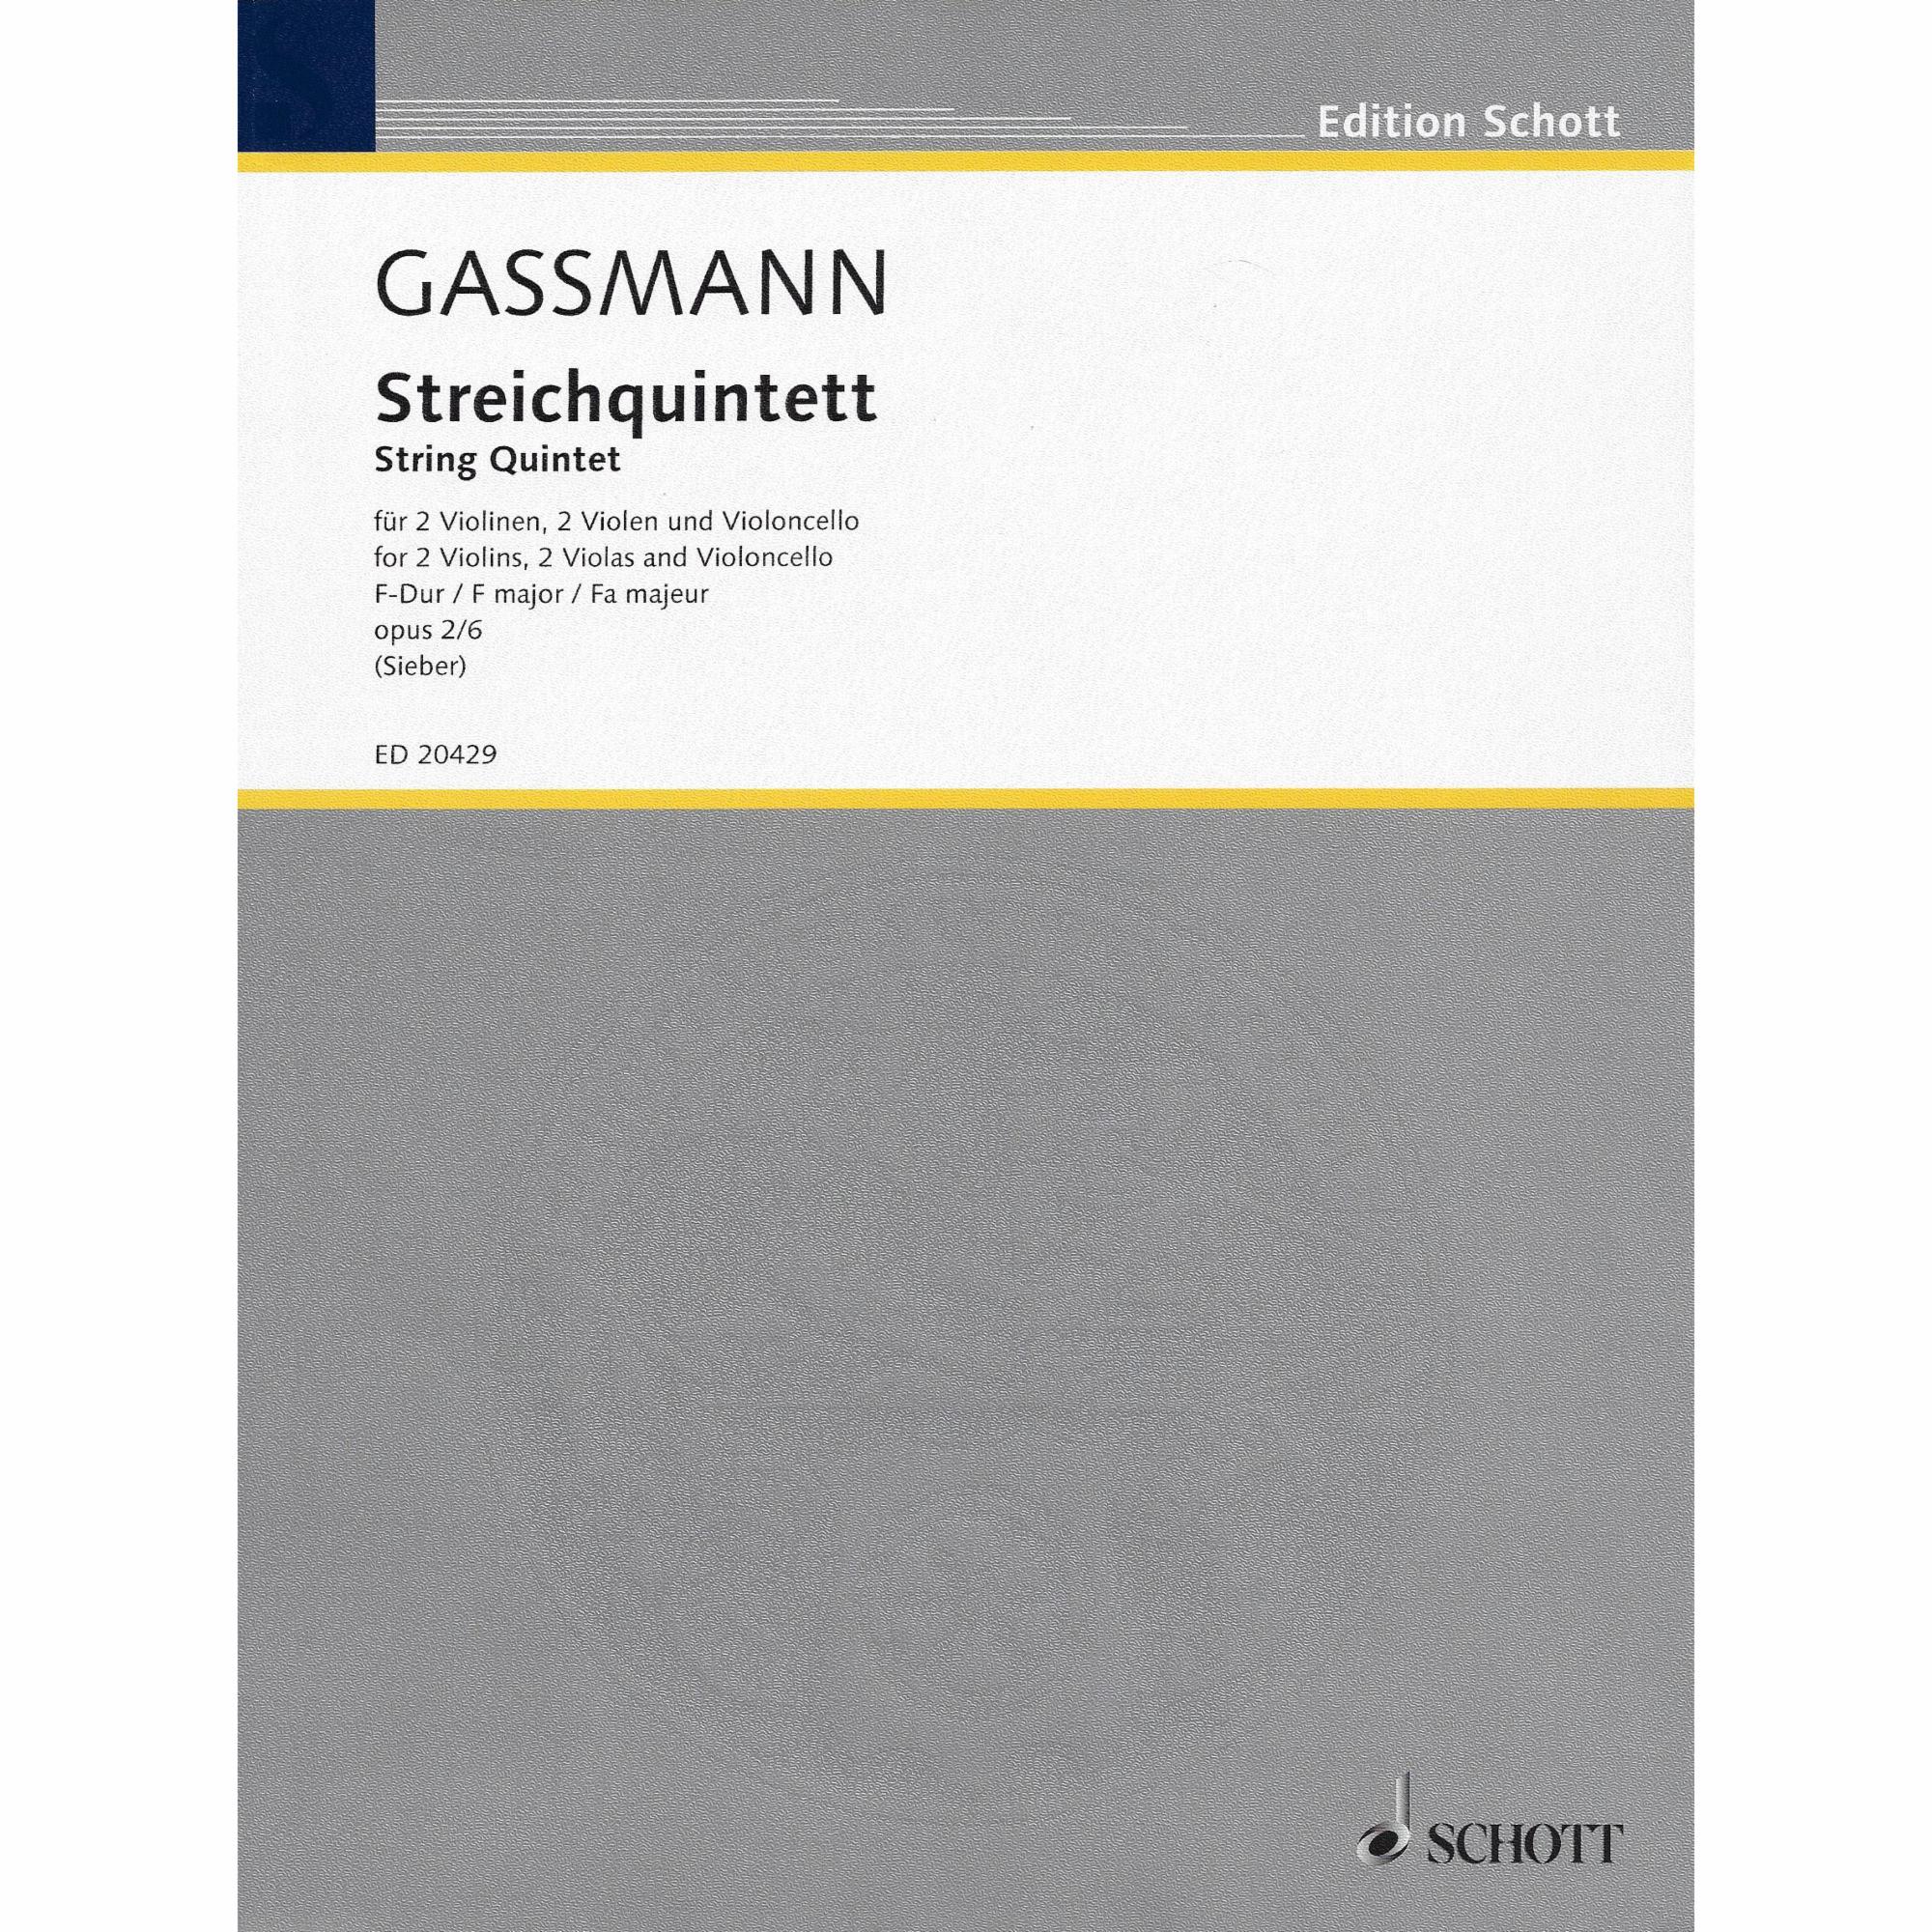 Gassmann -- String Quintet in F Major, Op. 2, No. 6